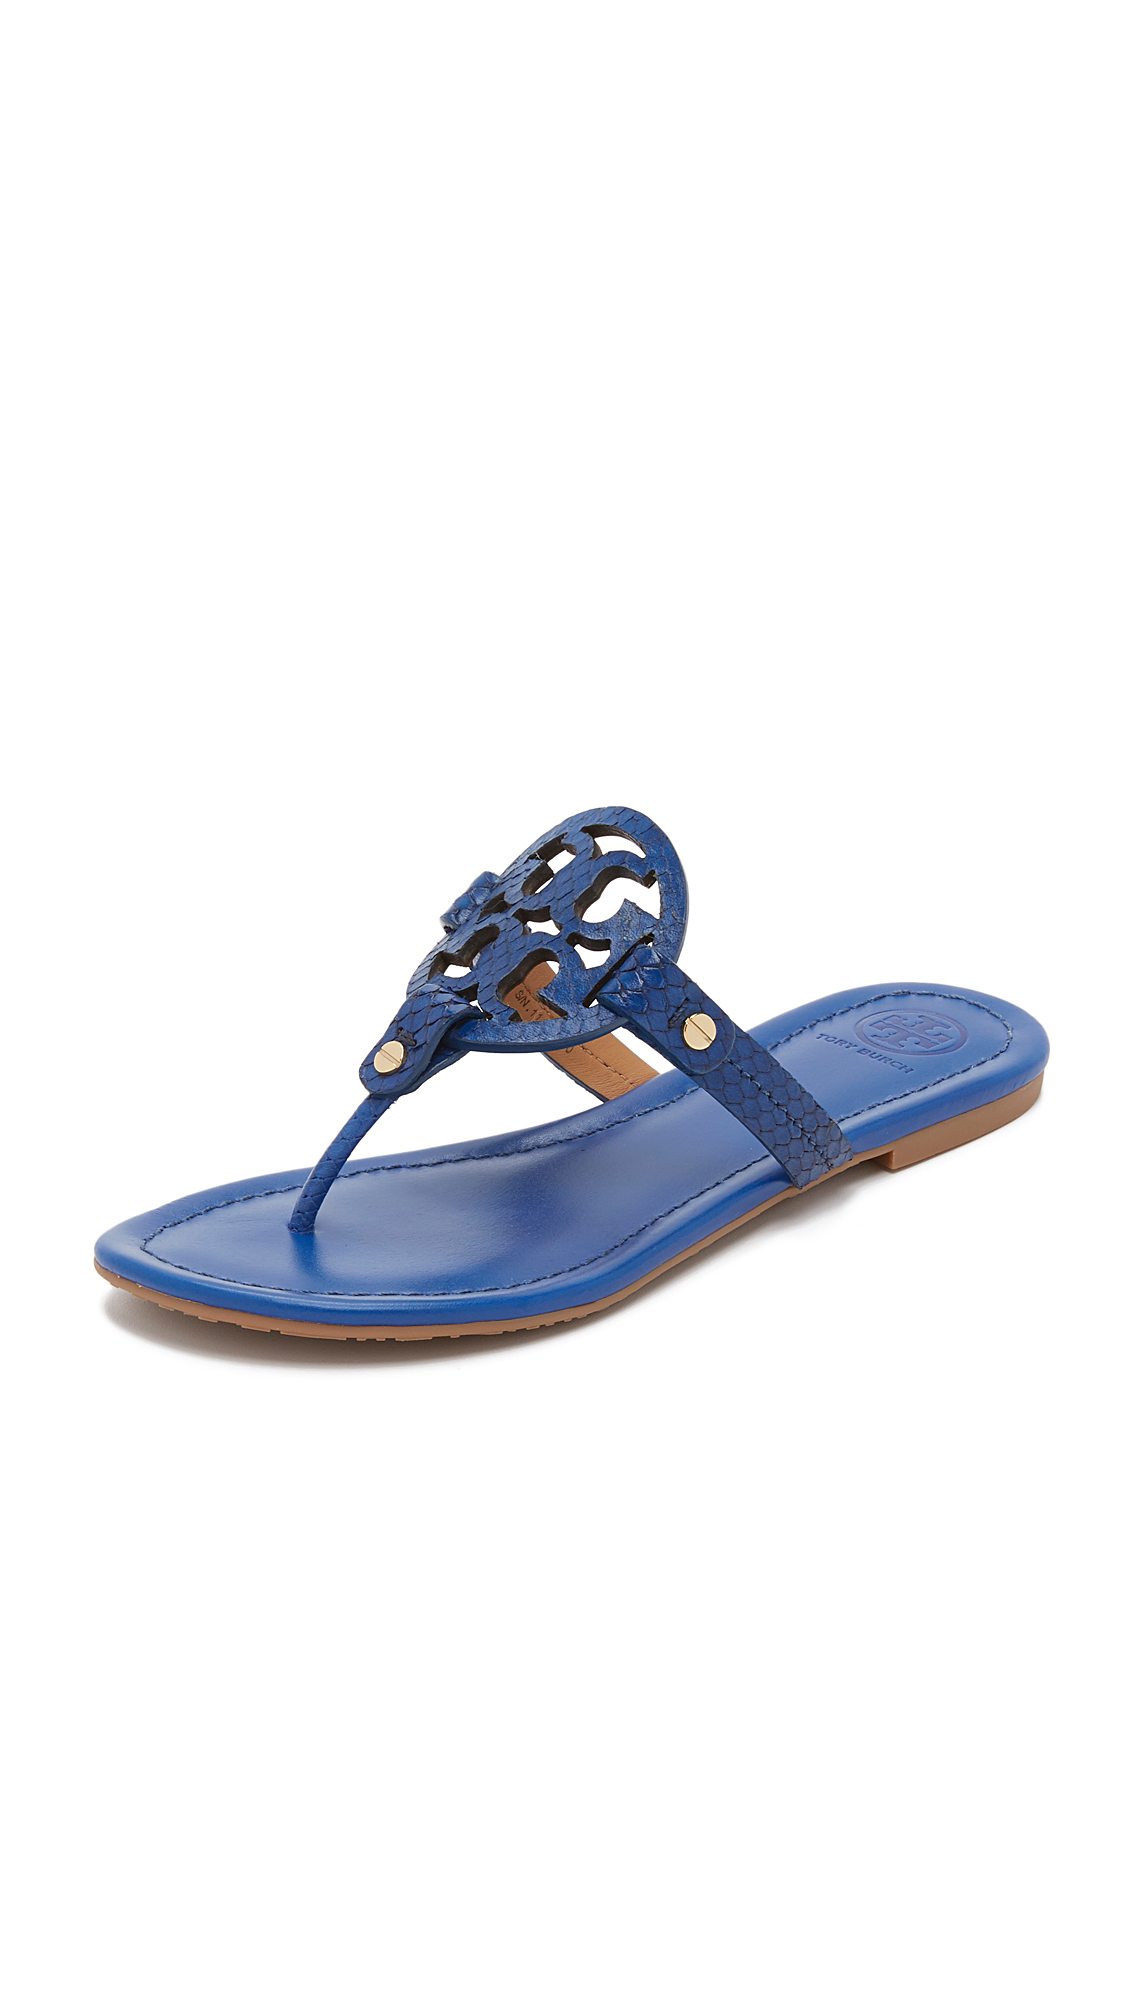 Tory Burch Miller Sandals in Blue | Lyst